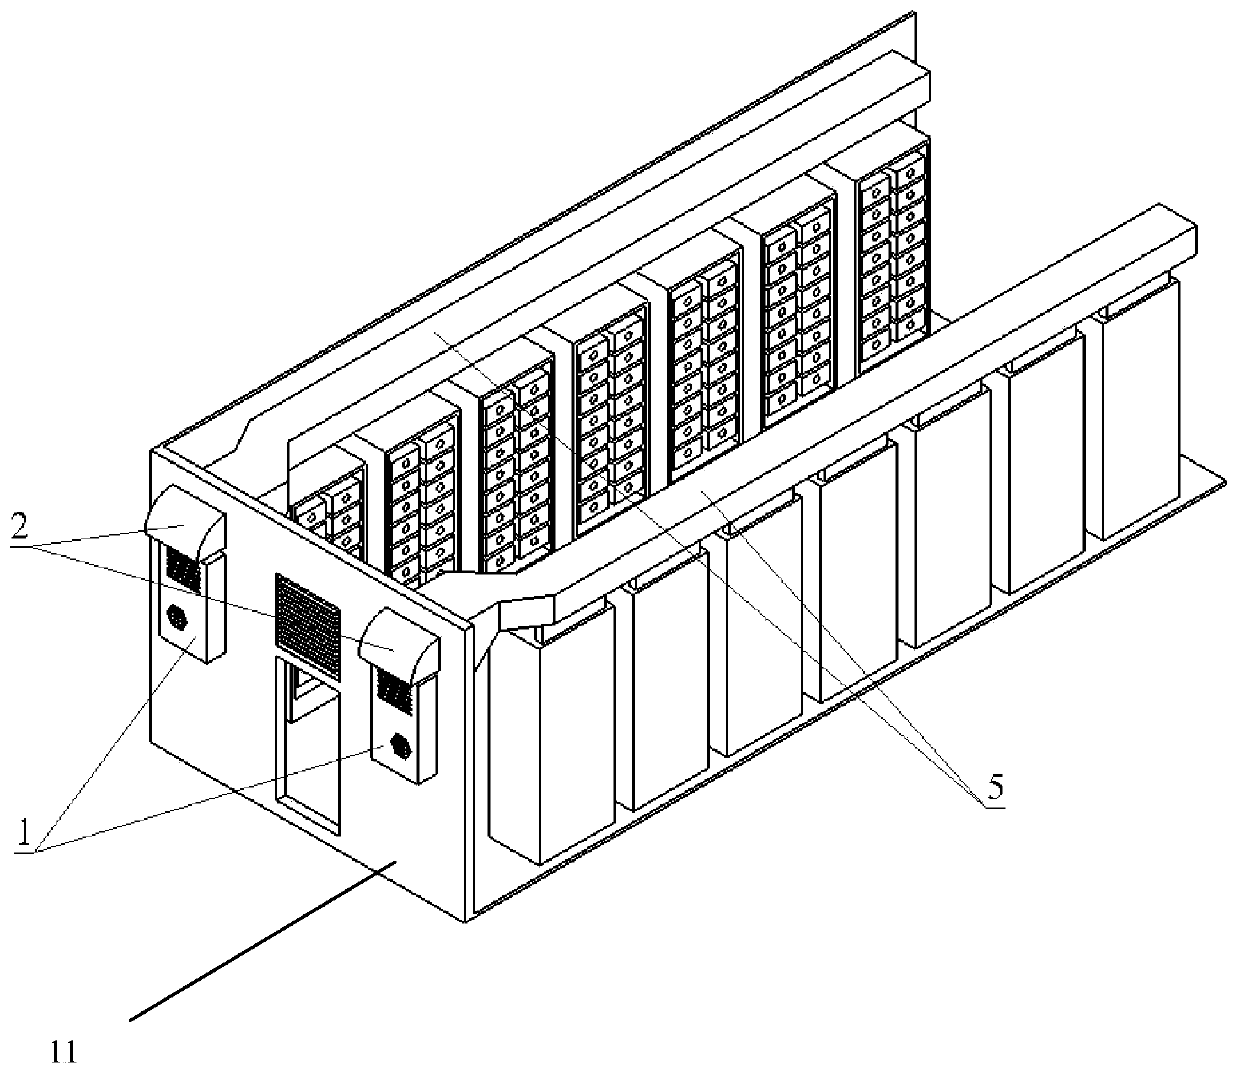 Energy storage container temperature control system and temperature control method